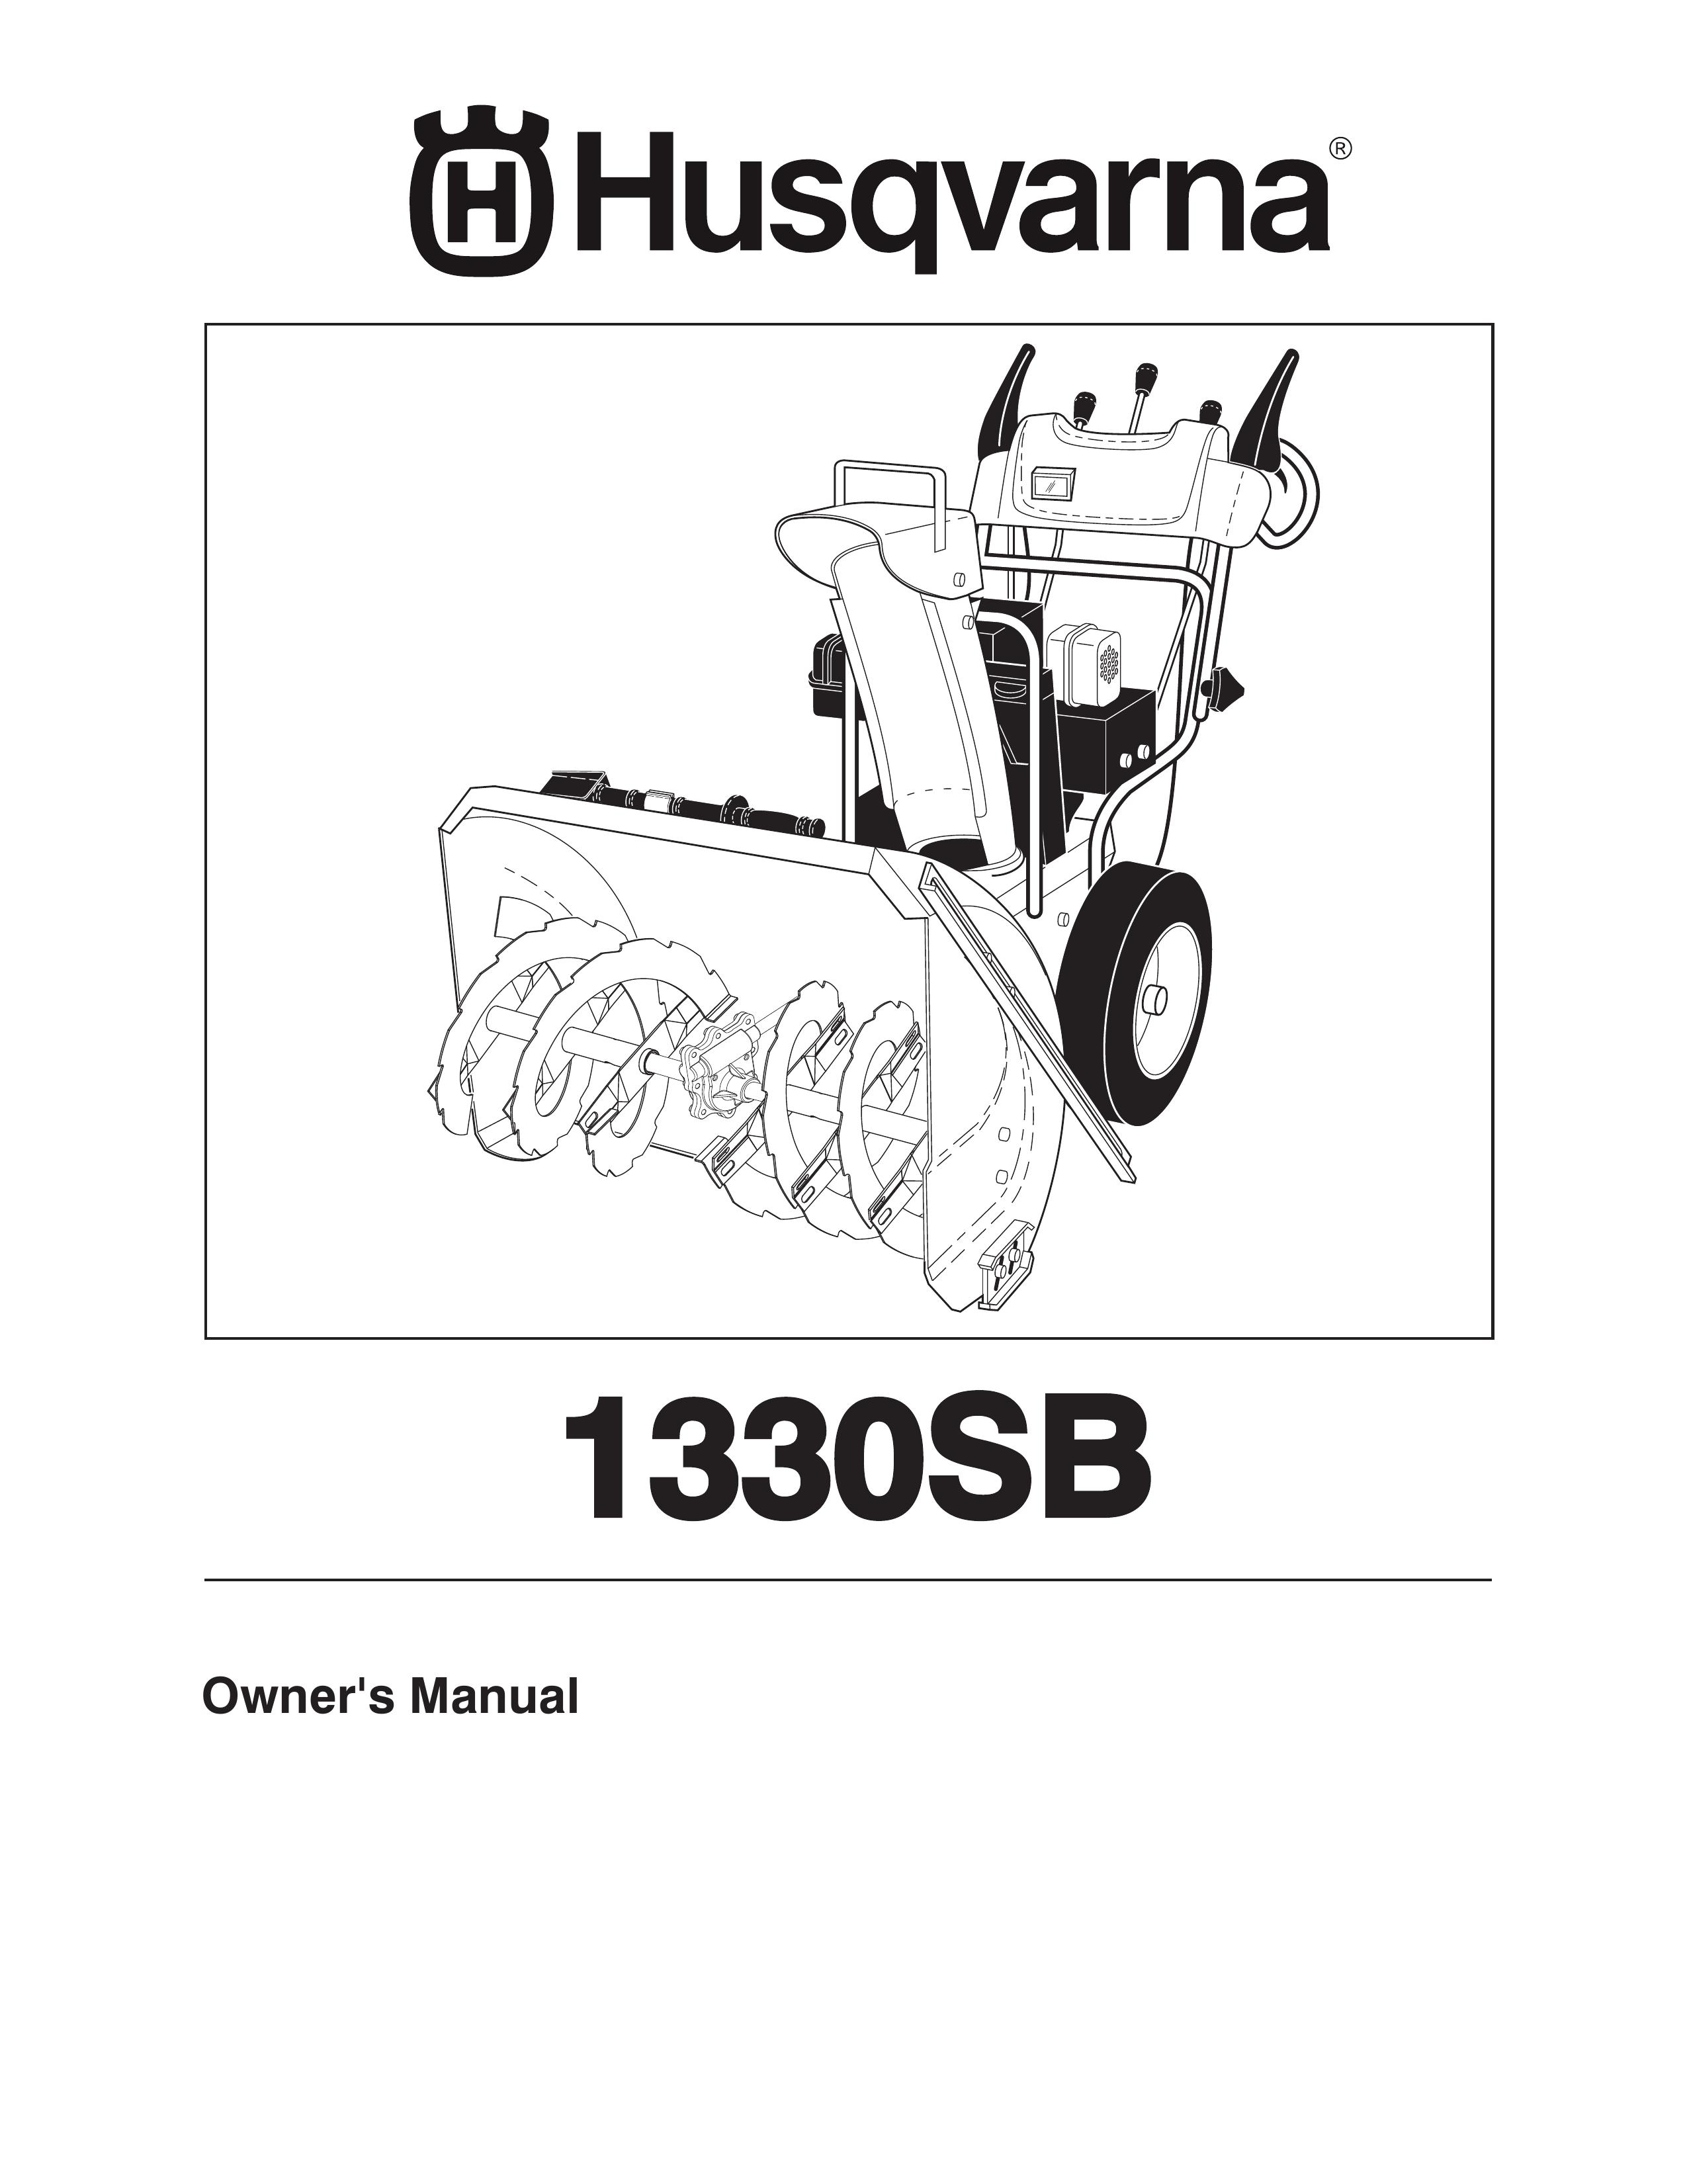 Husqvarna 1330SB Snow Blower User Manual